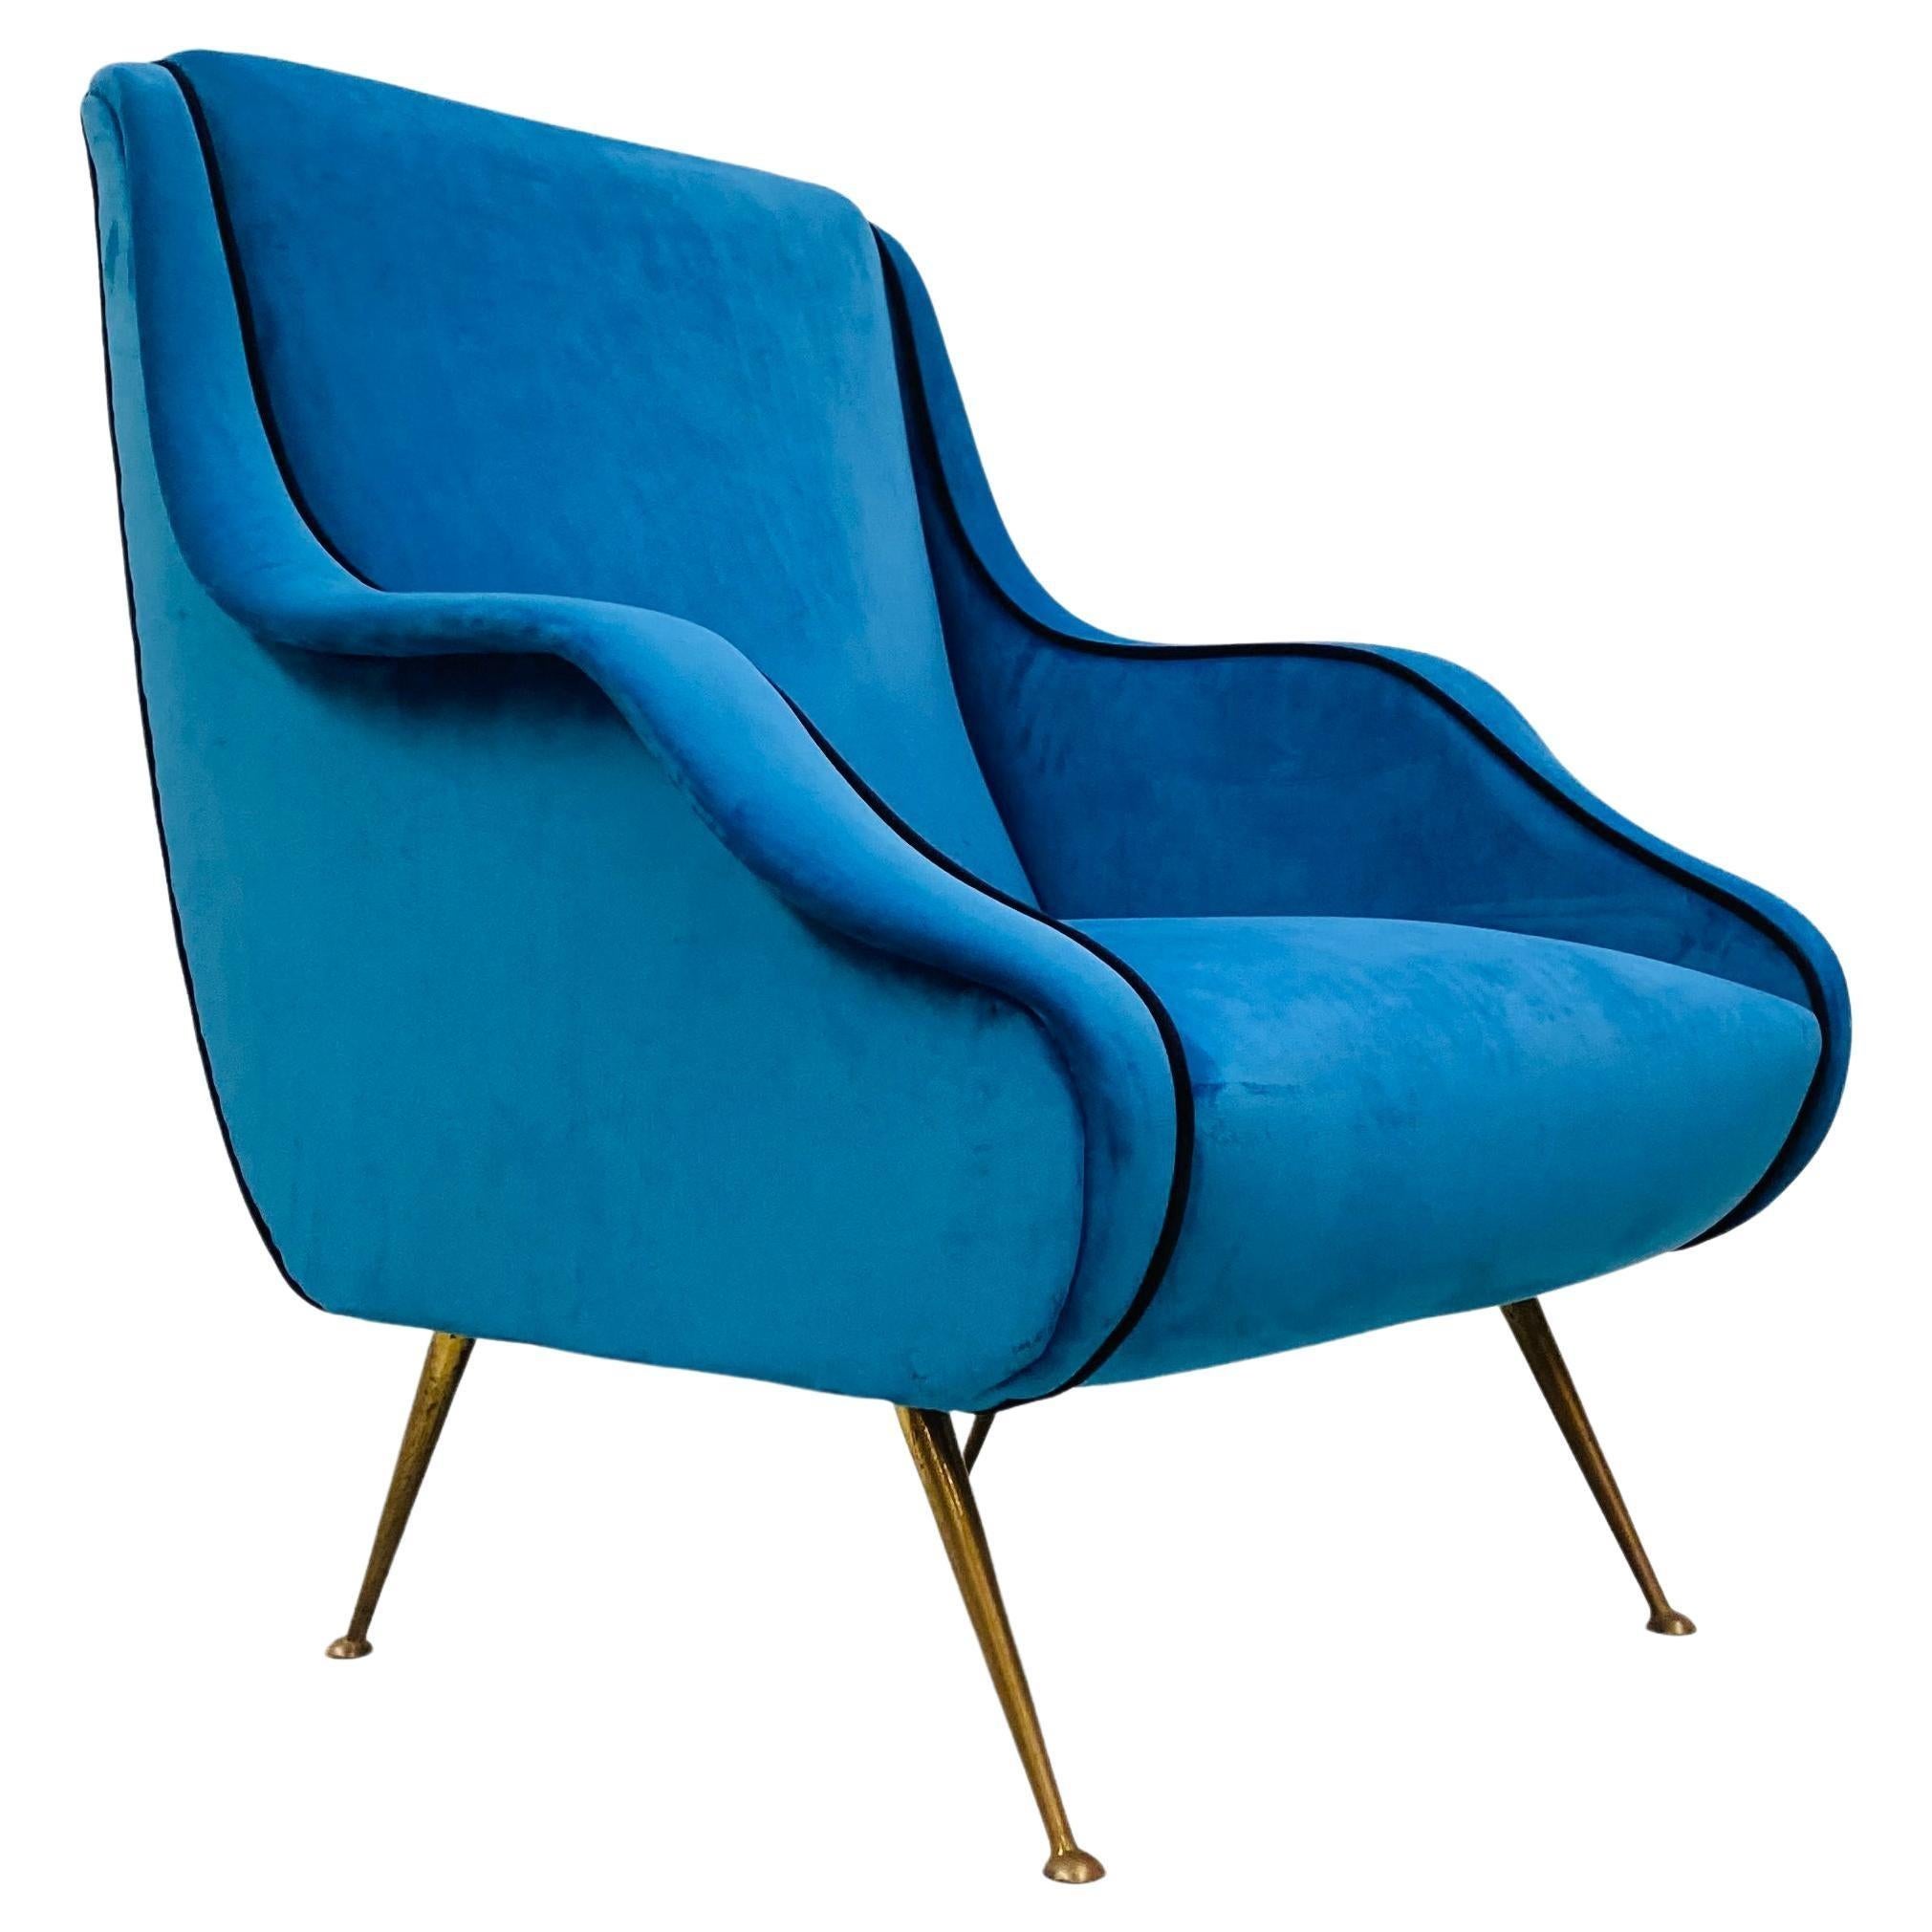 Vintage Italian Blue Velvet Armchair with Brass Legs by Carlo de Carli, 1950s For Sale 7